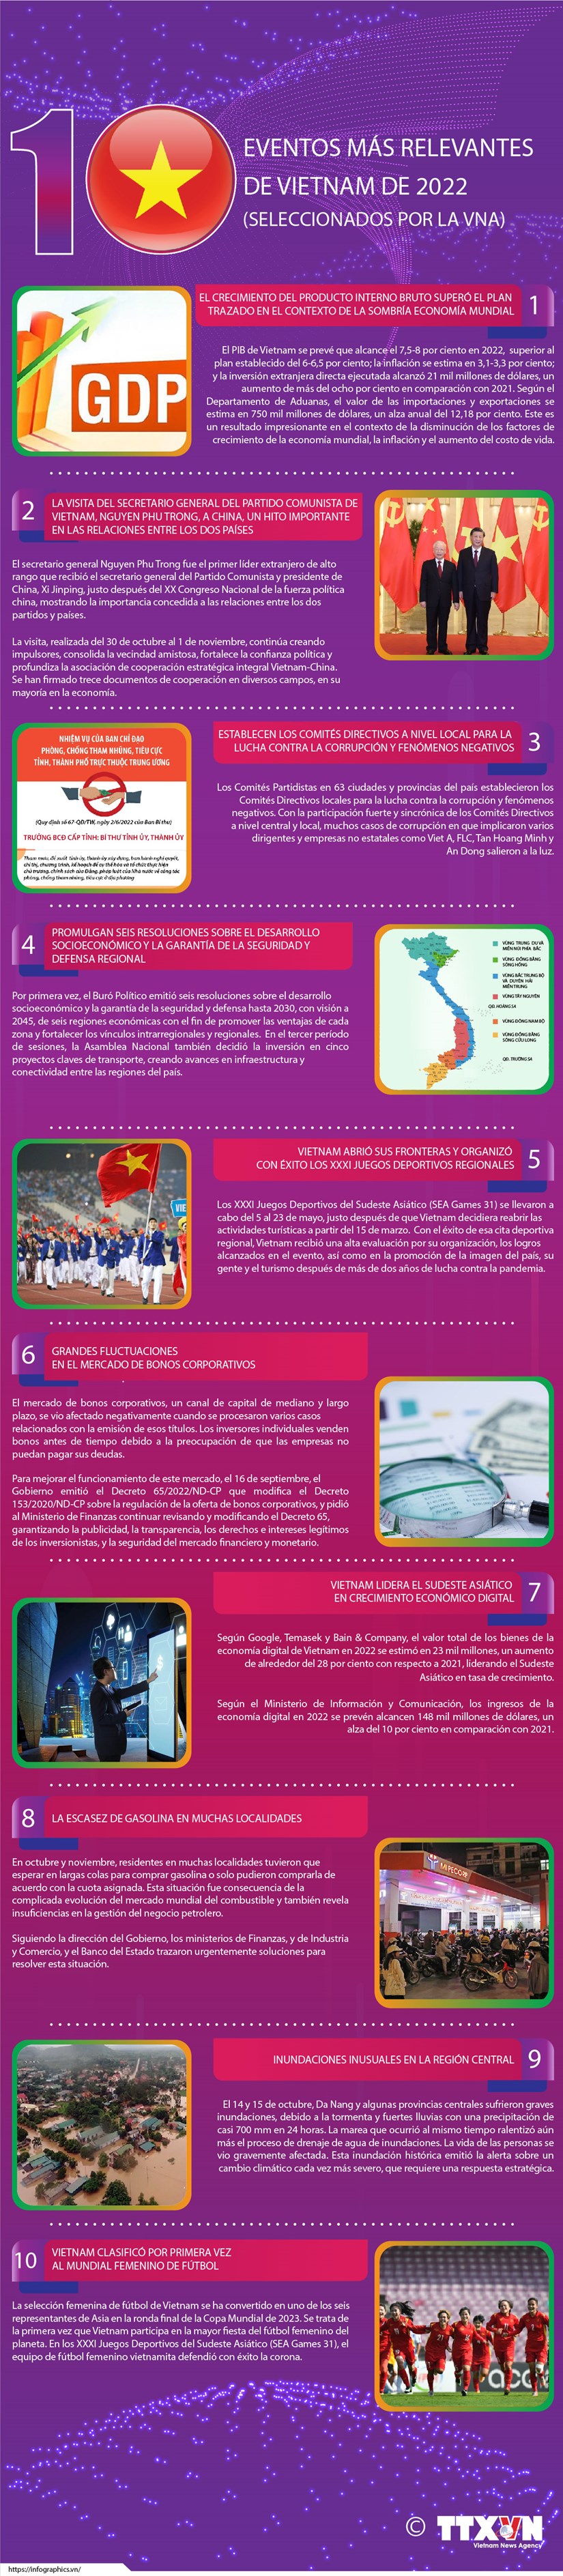 VNA selecciona 10 eventos mas relevantes de Vietnam en 2022 hinh anh 1